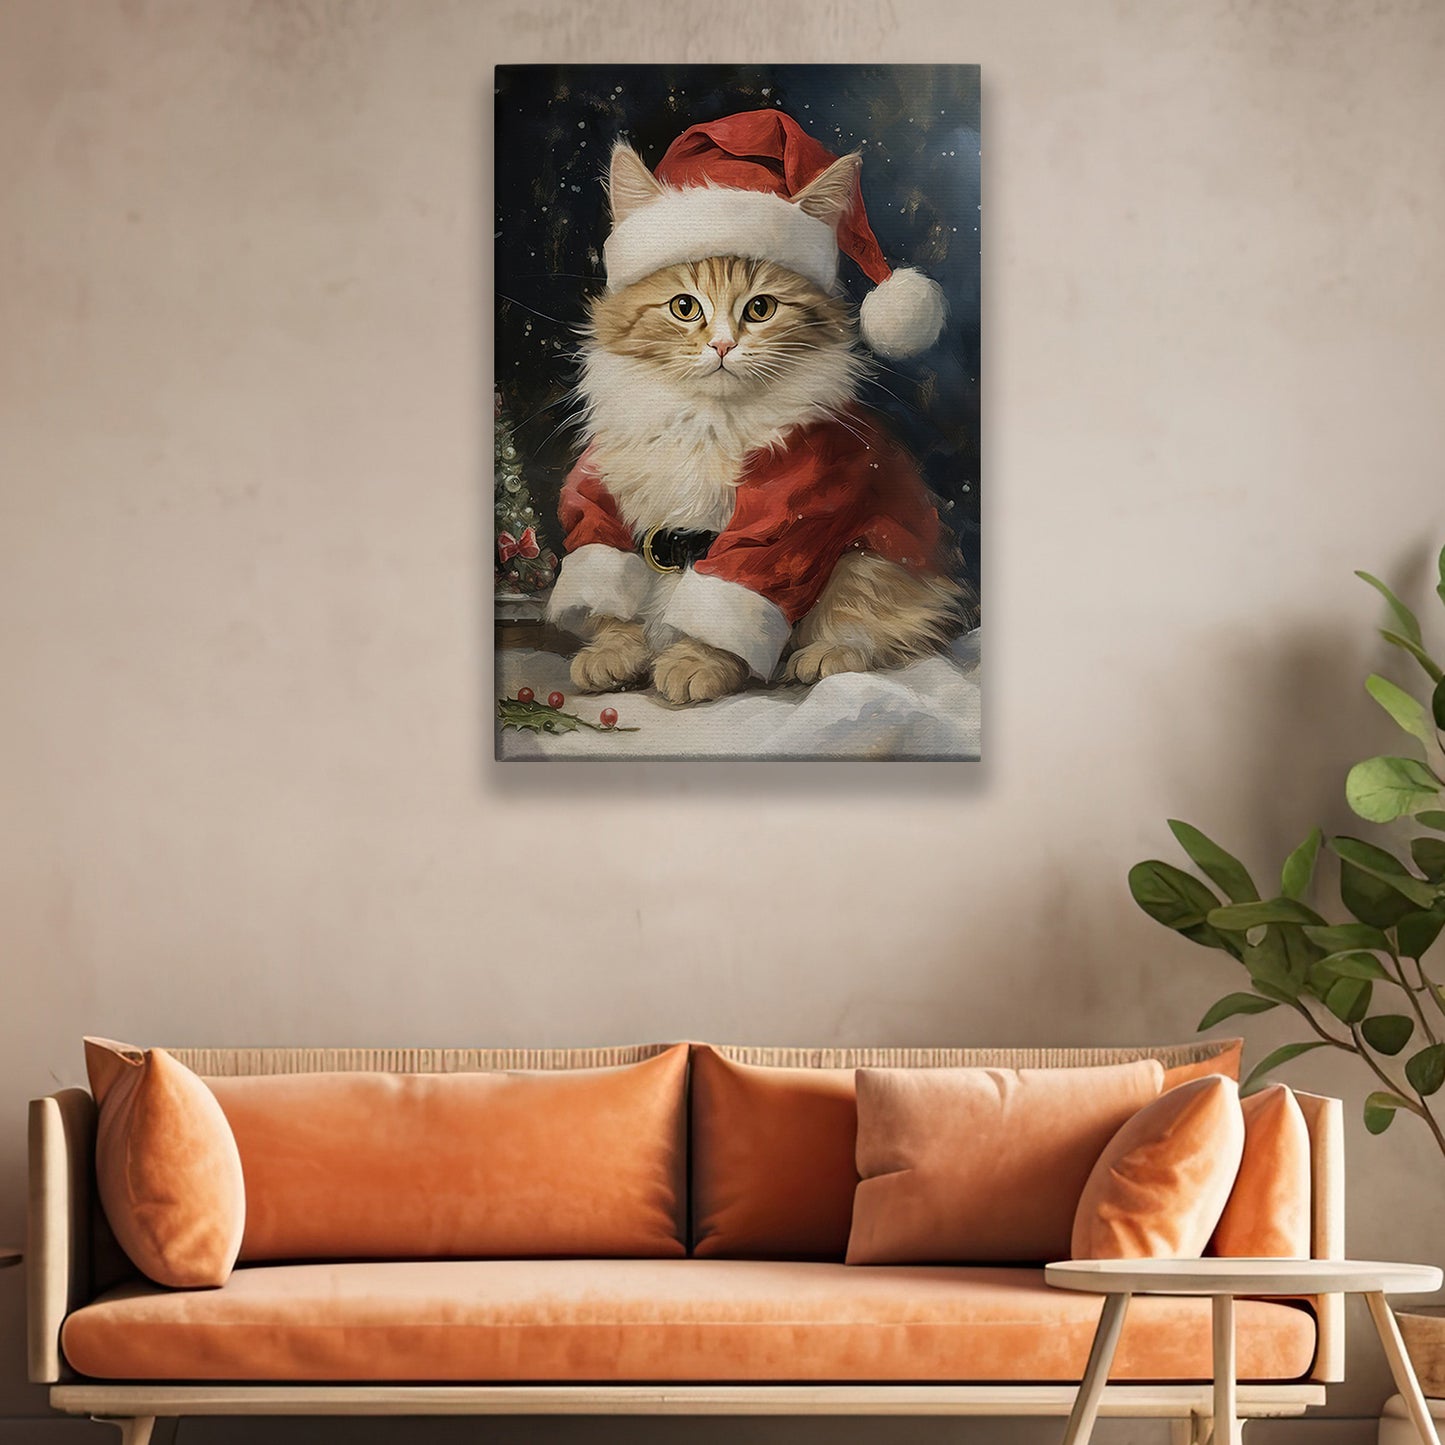 Santa Claus Cat Christmas Canvas Painting, Xmas Wall Art Decor - Cat Christmas Poster Gift